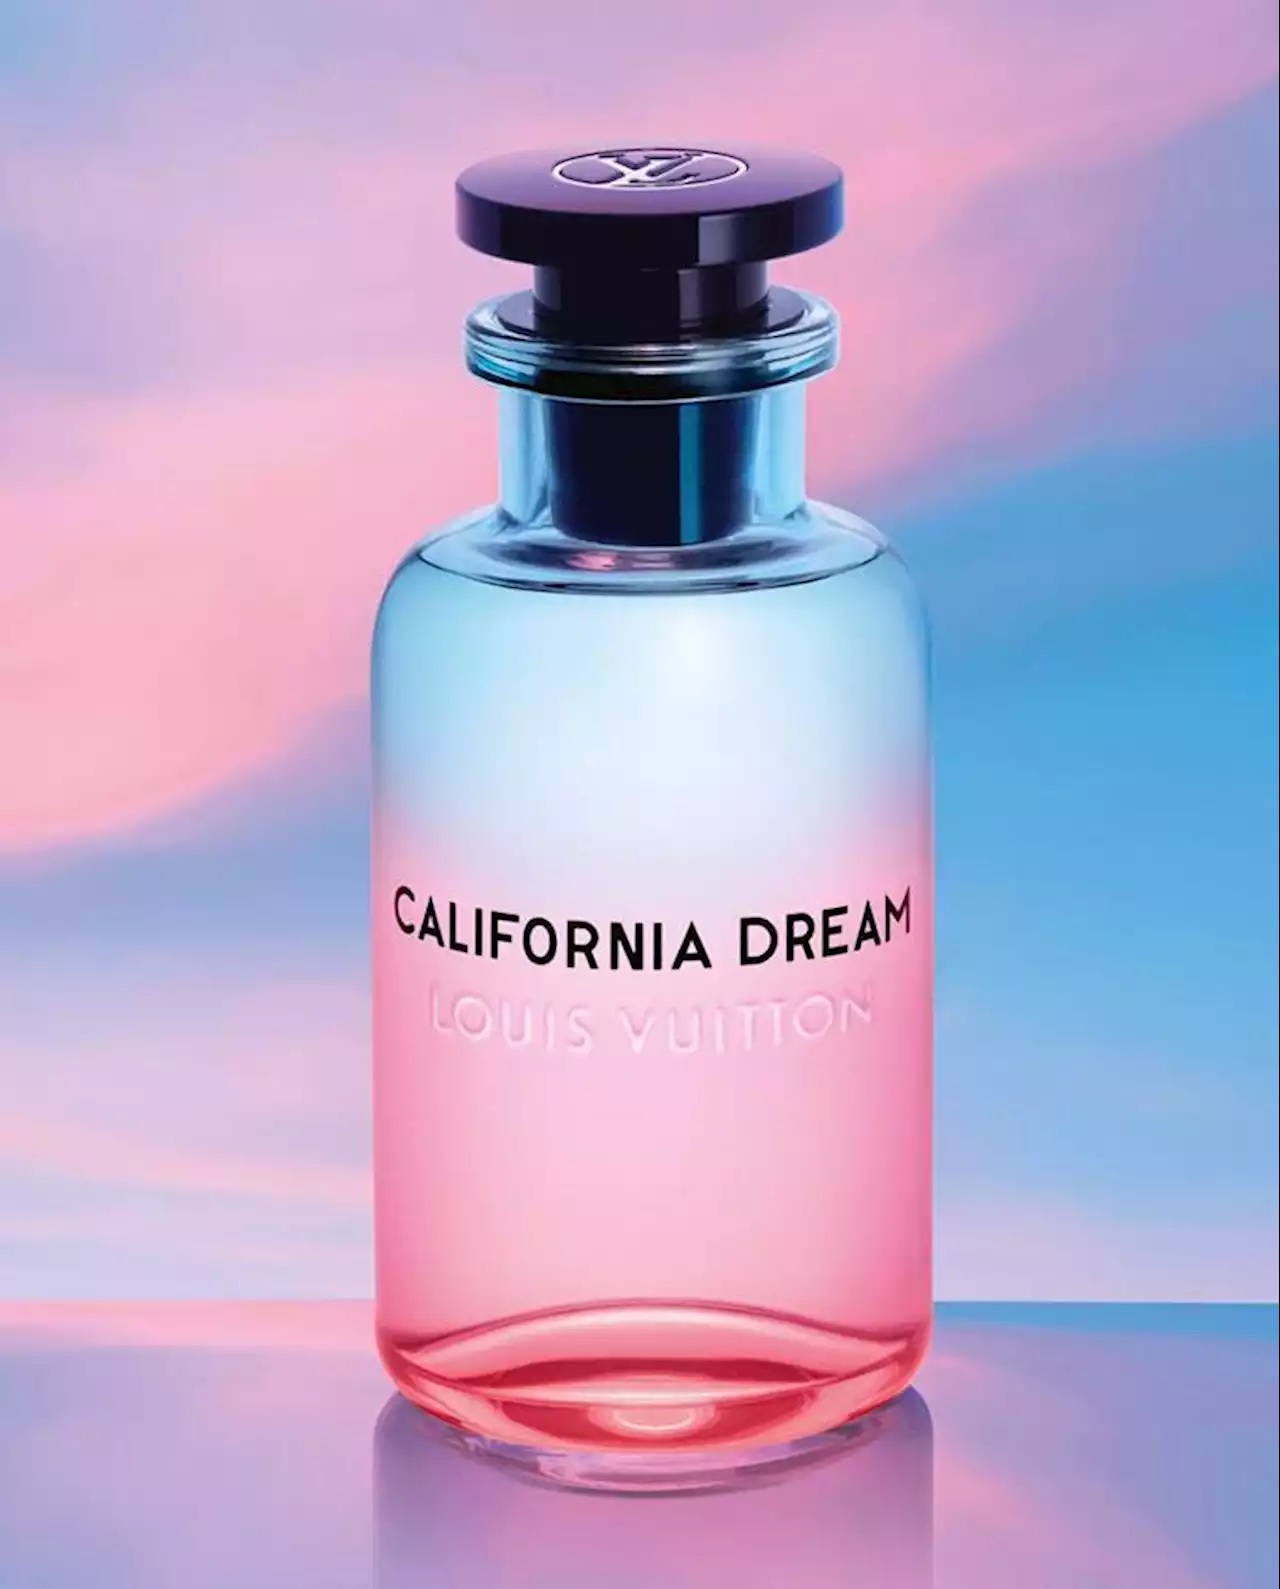 California Dream Louis Vuitton perfume - a new fragrance for women and men 2020